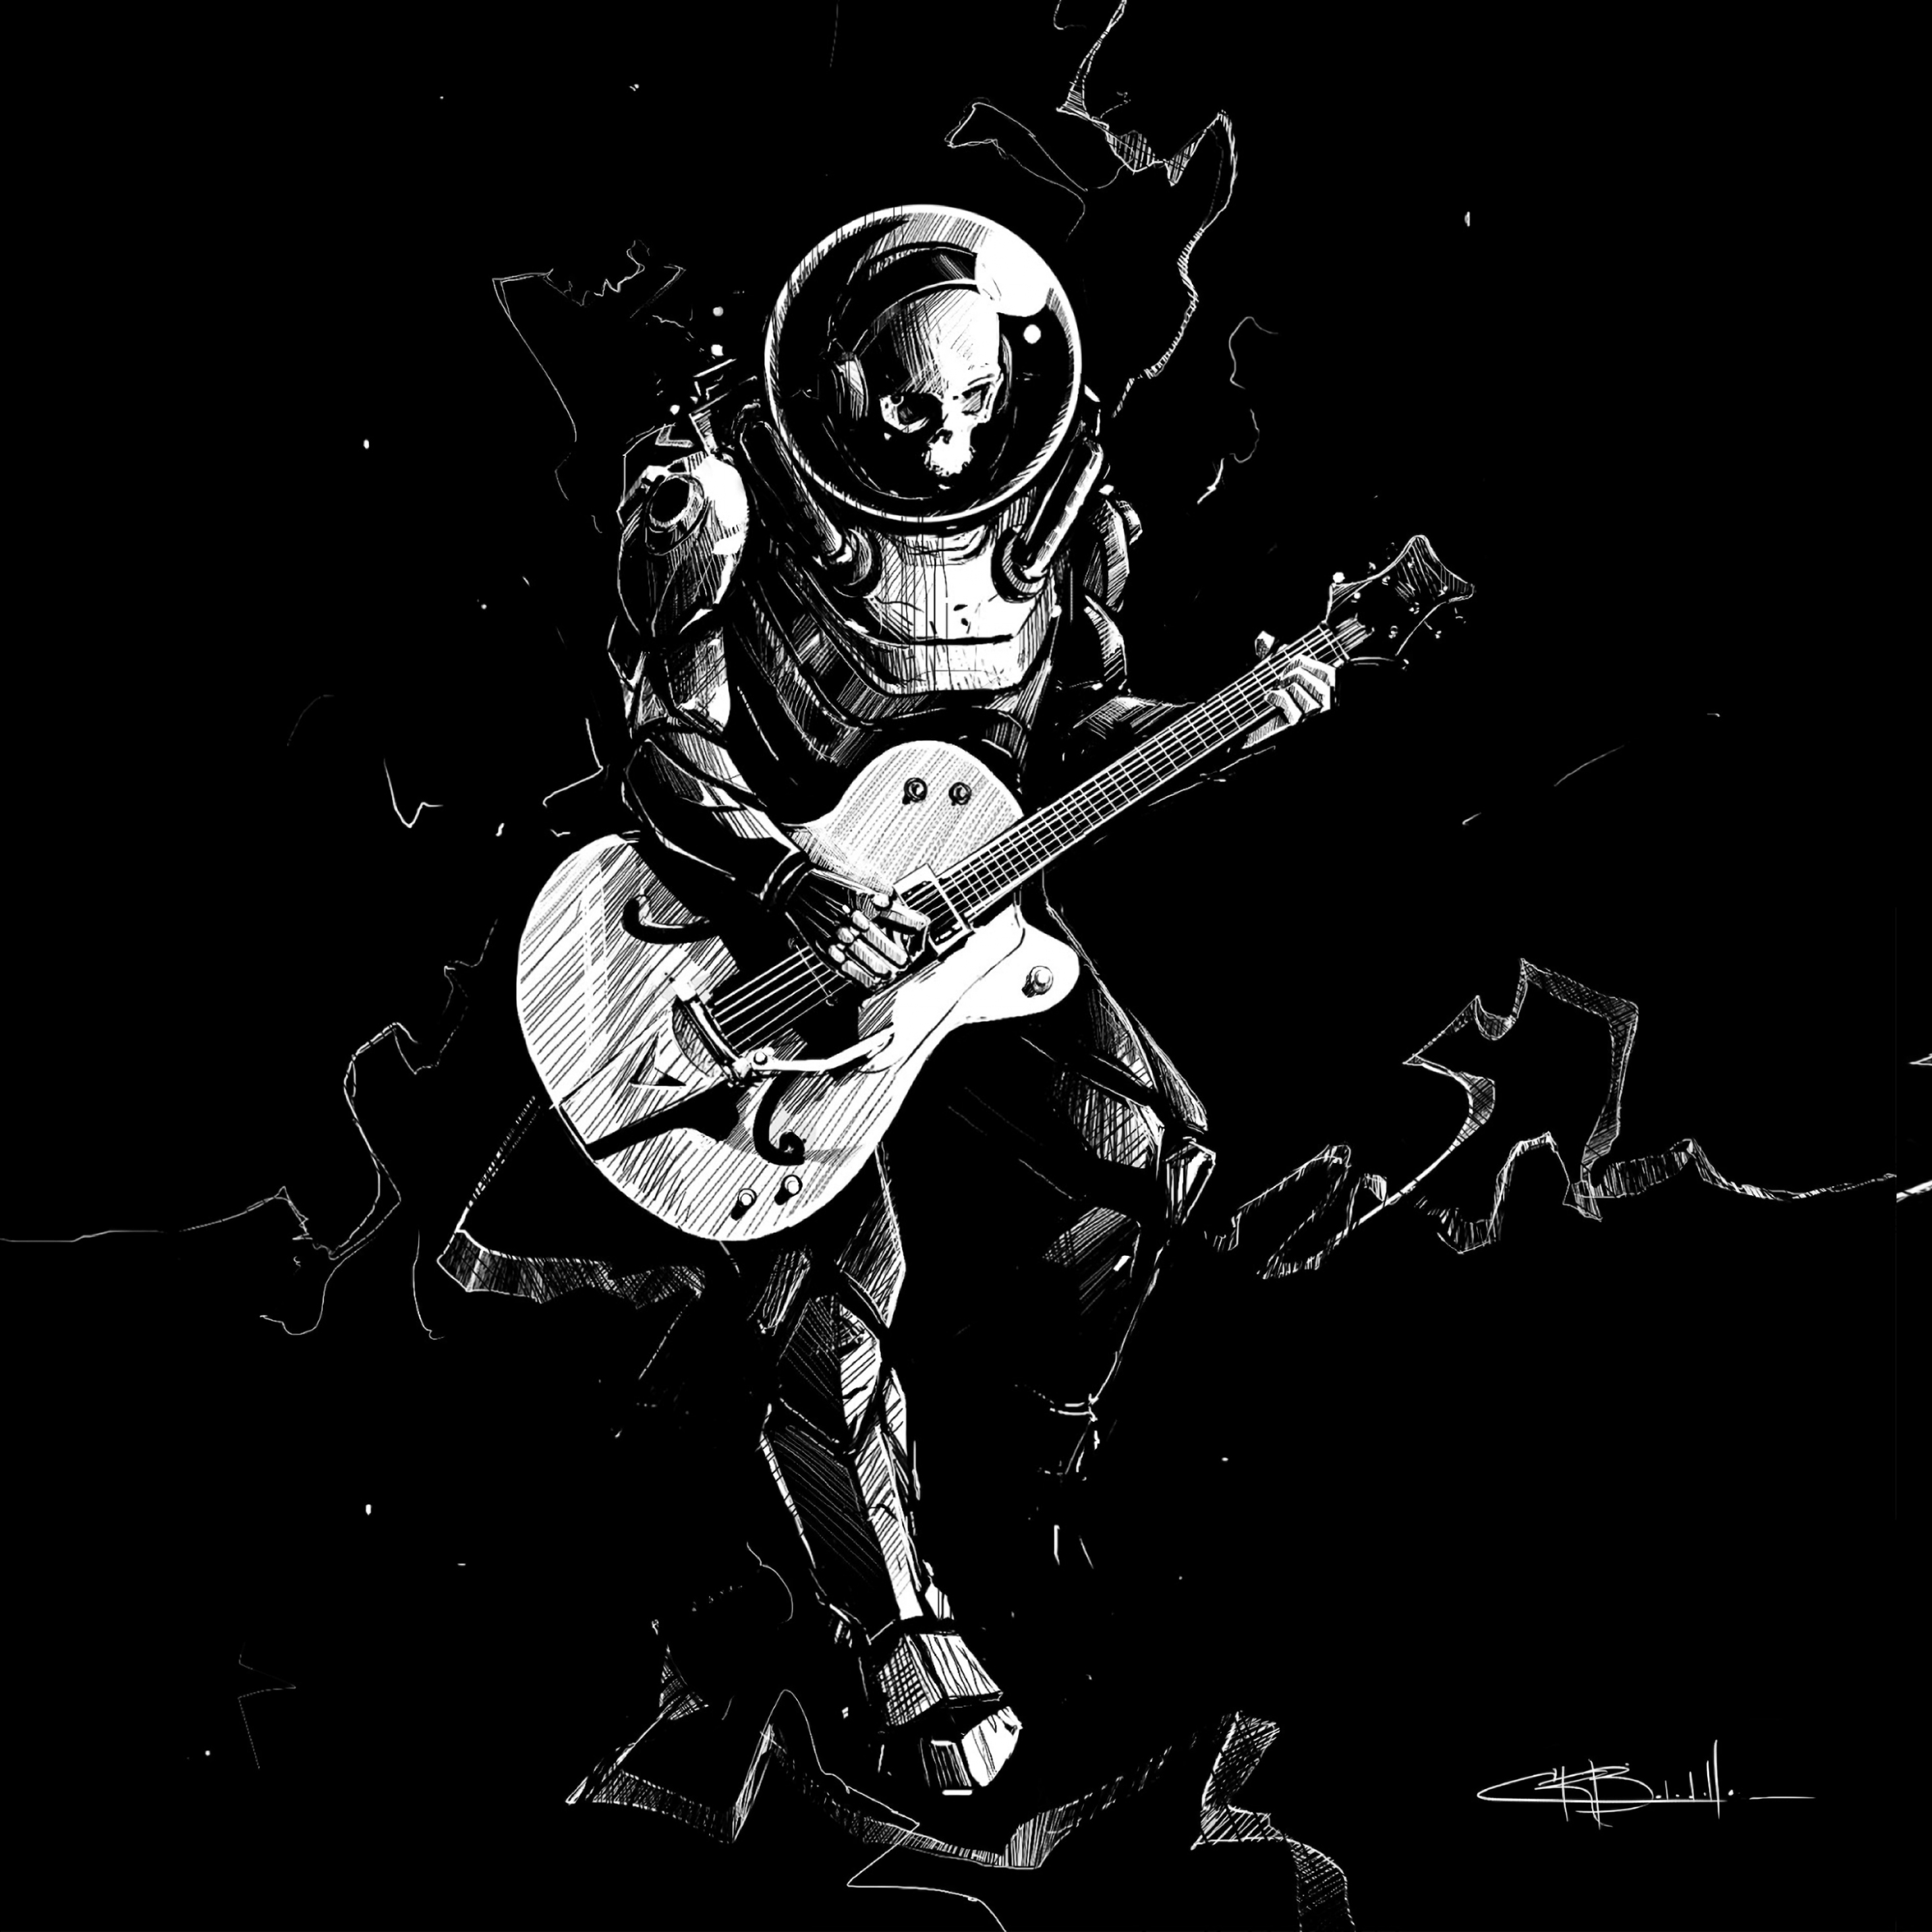 Download wallpaper x art skeleton guitar play music bw ipad pro retina x hd background